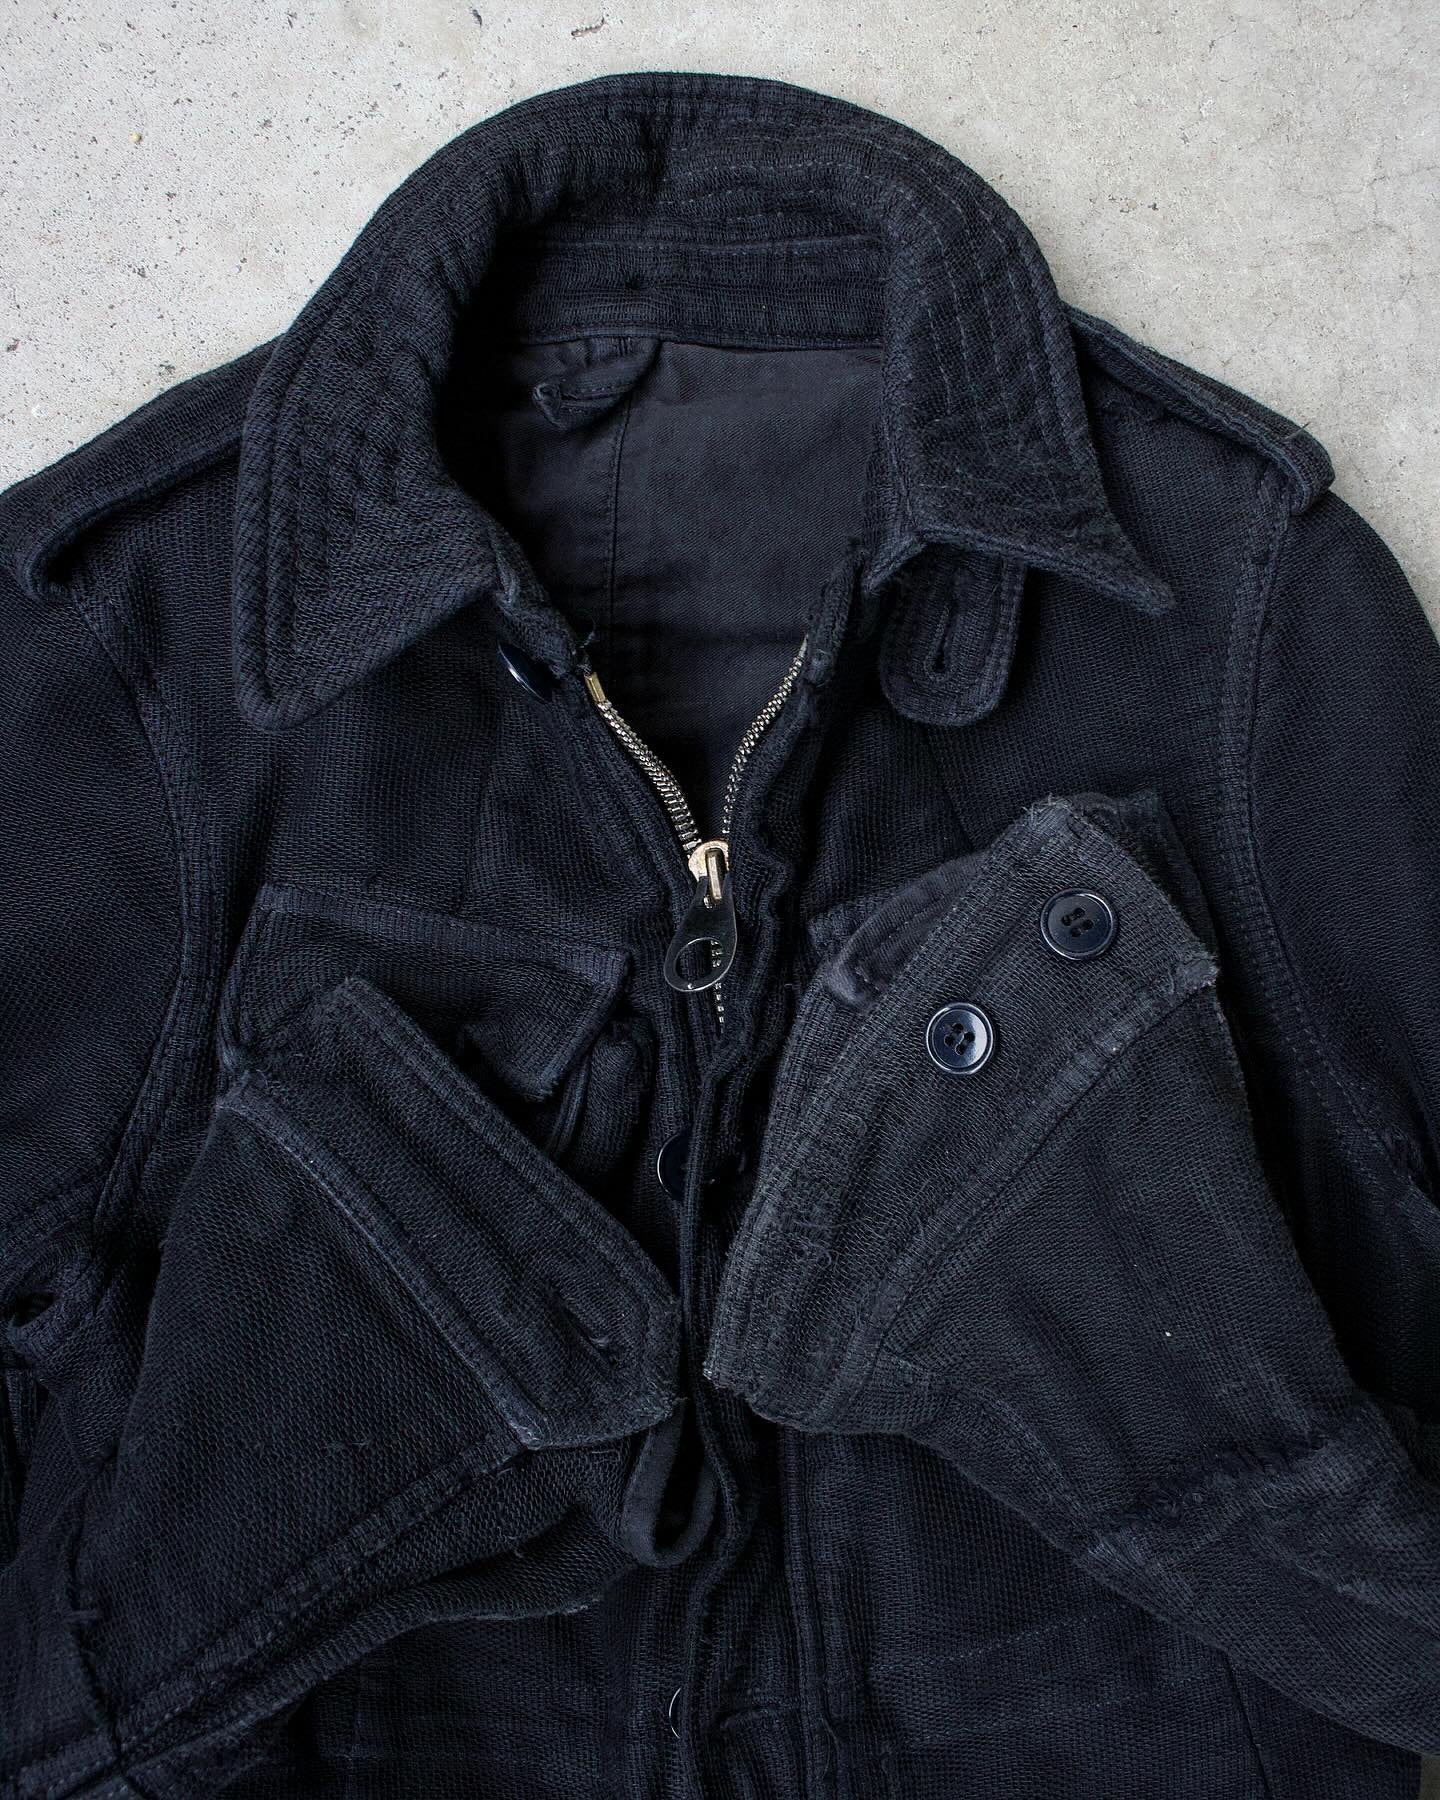 Mihara Yasuhiro AW05 Distressed Layered Mesh Military Jacket (Navy) close up shot item jacket 